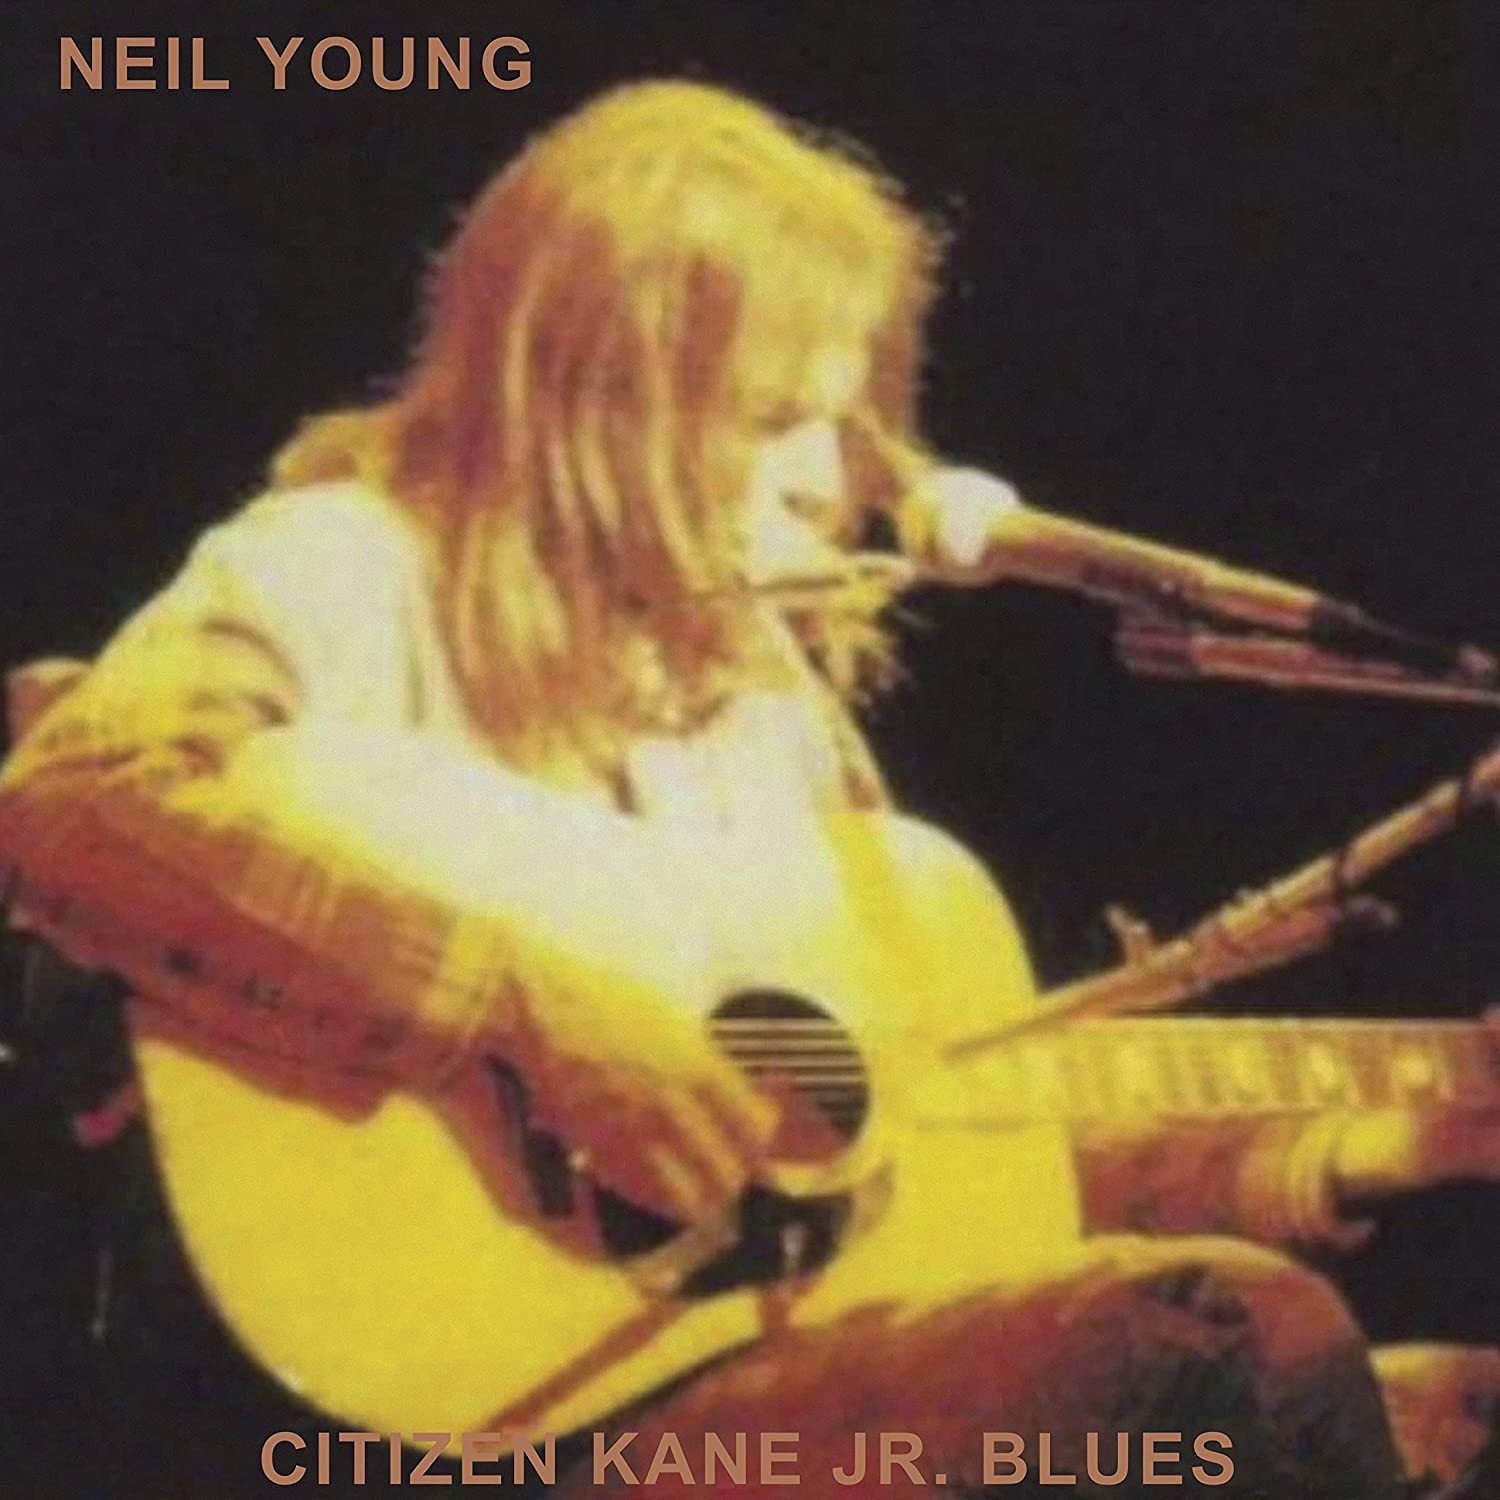 Neil Young - Citizen Kane Jr. Blues (Live At The Bottom Line) (LP)